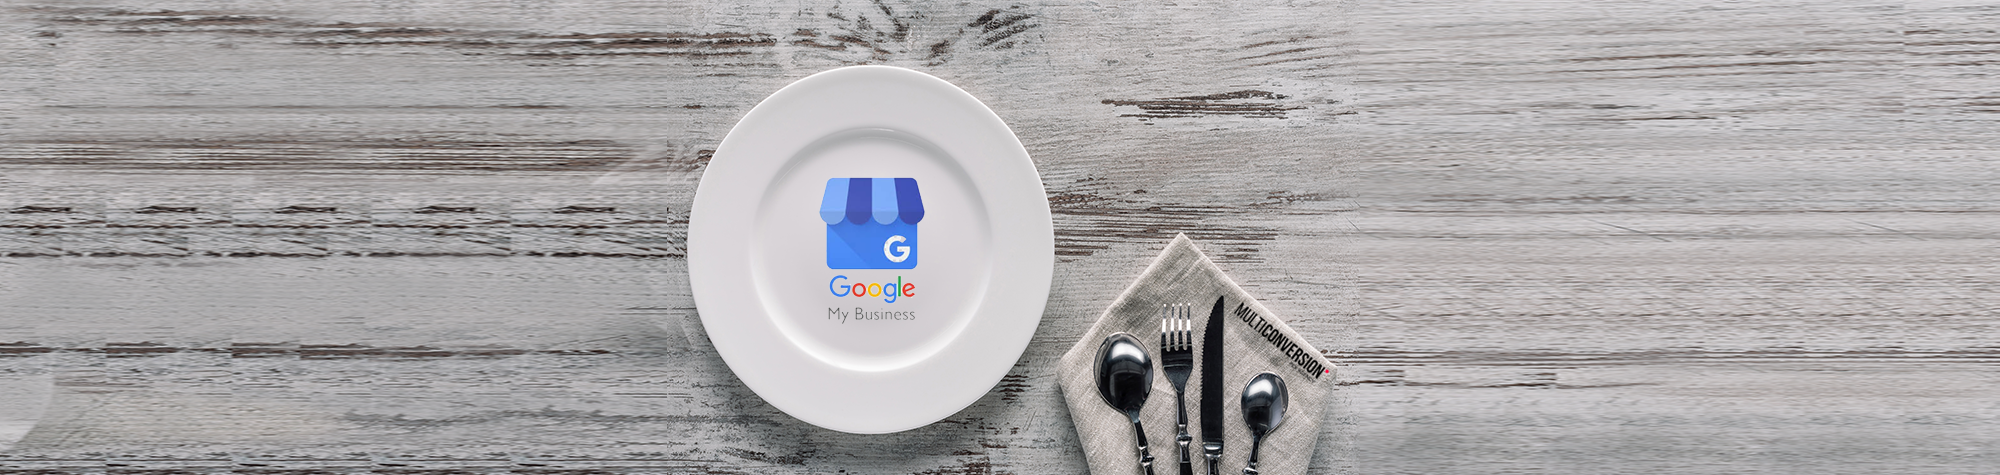 Restaurants no longer need a website ‘thanks’ to Google